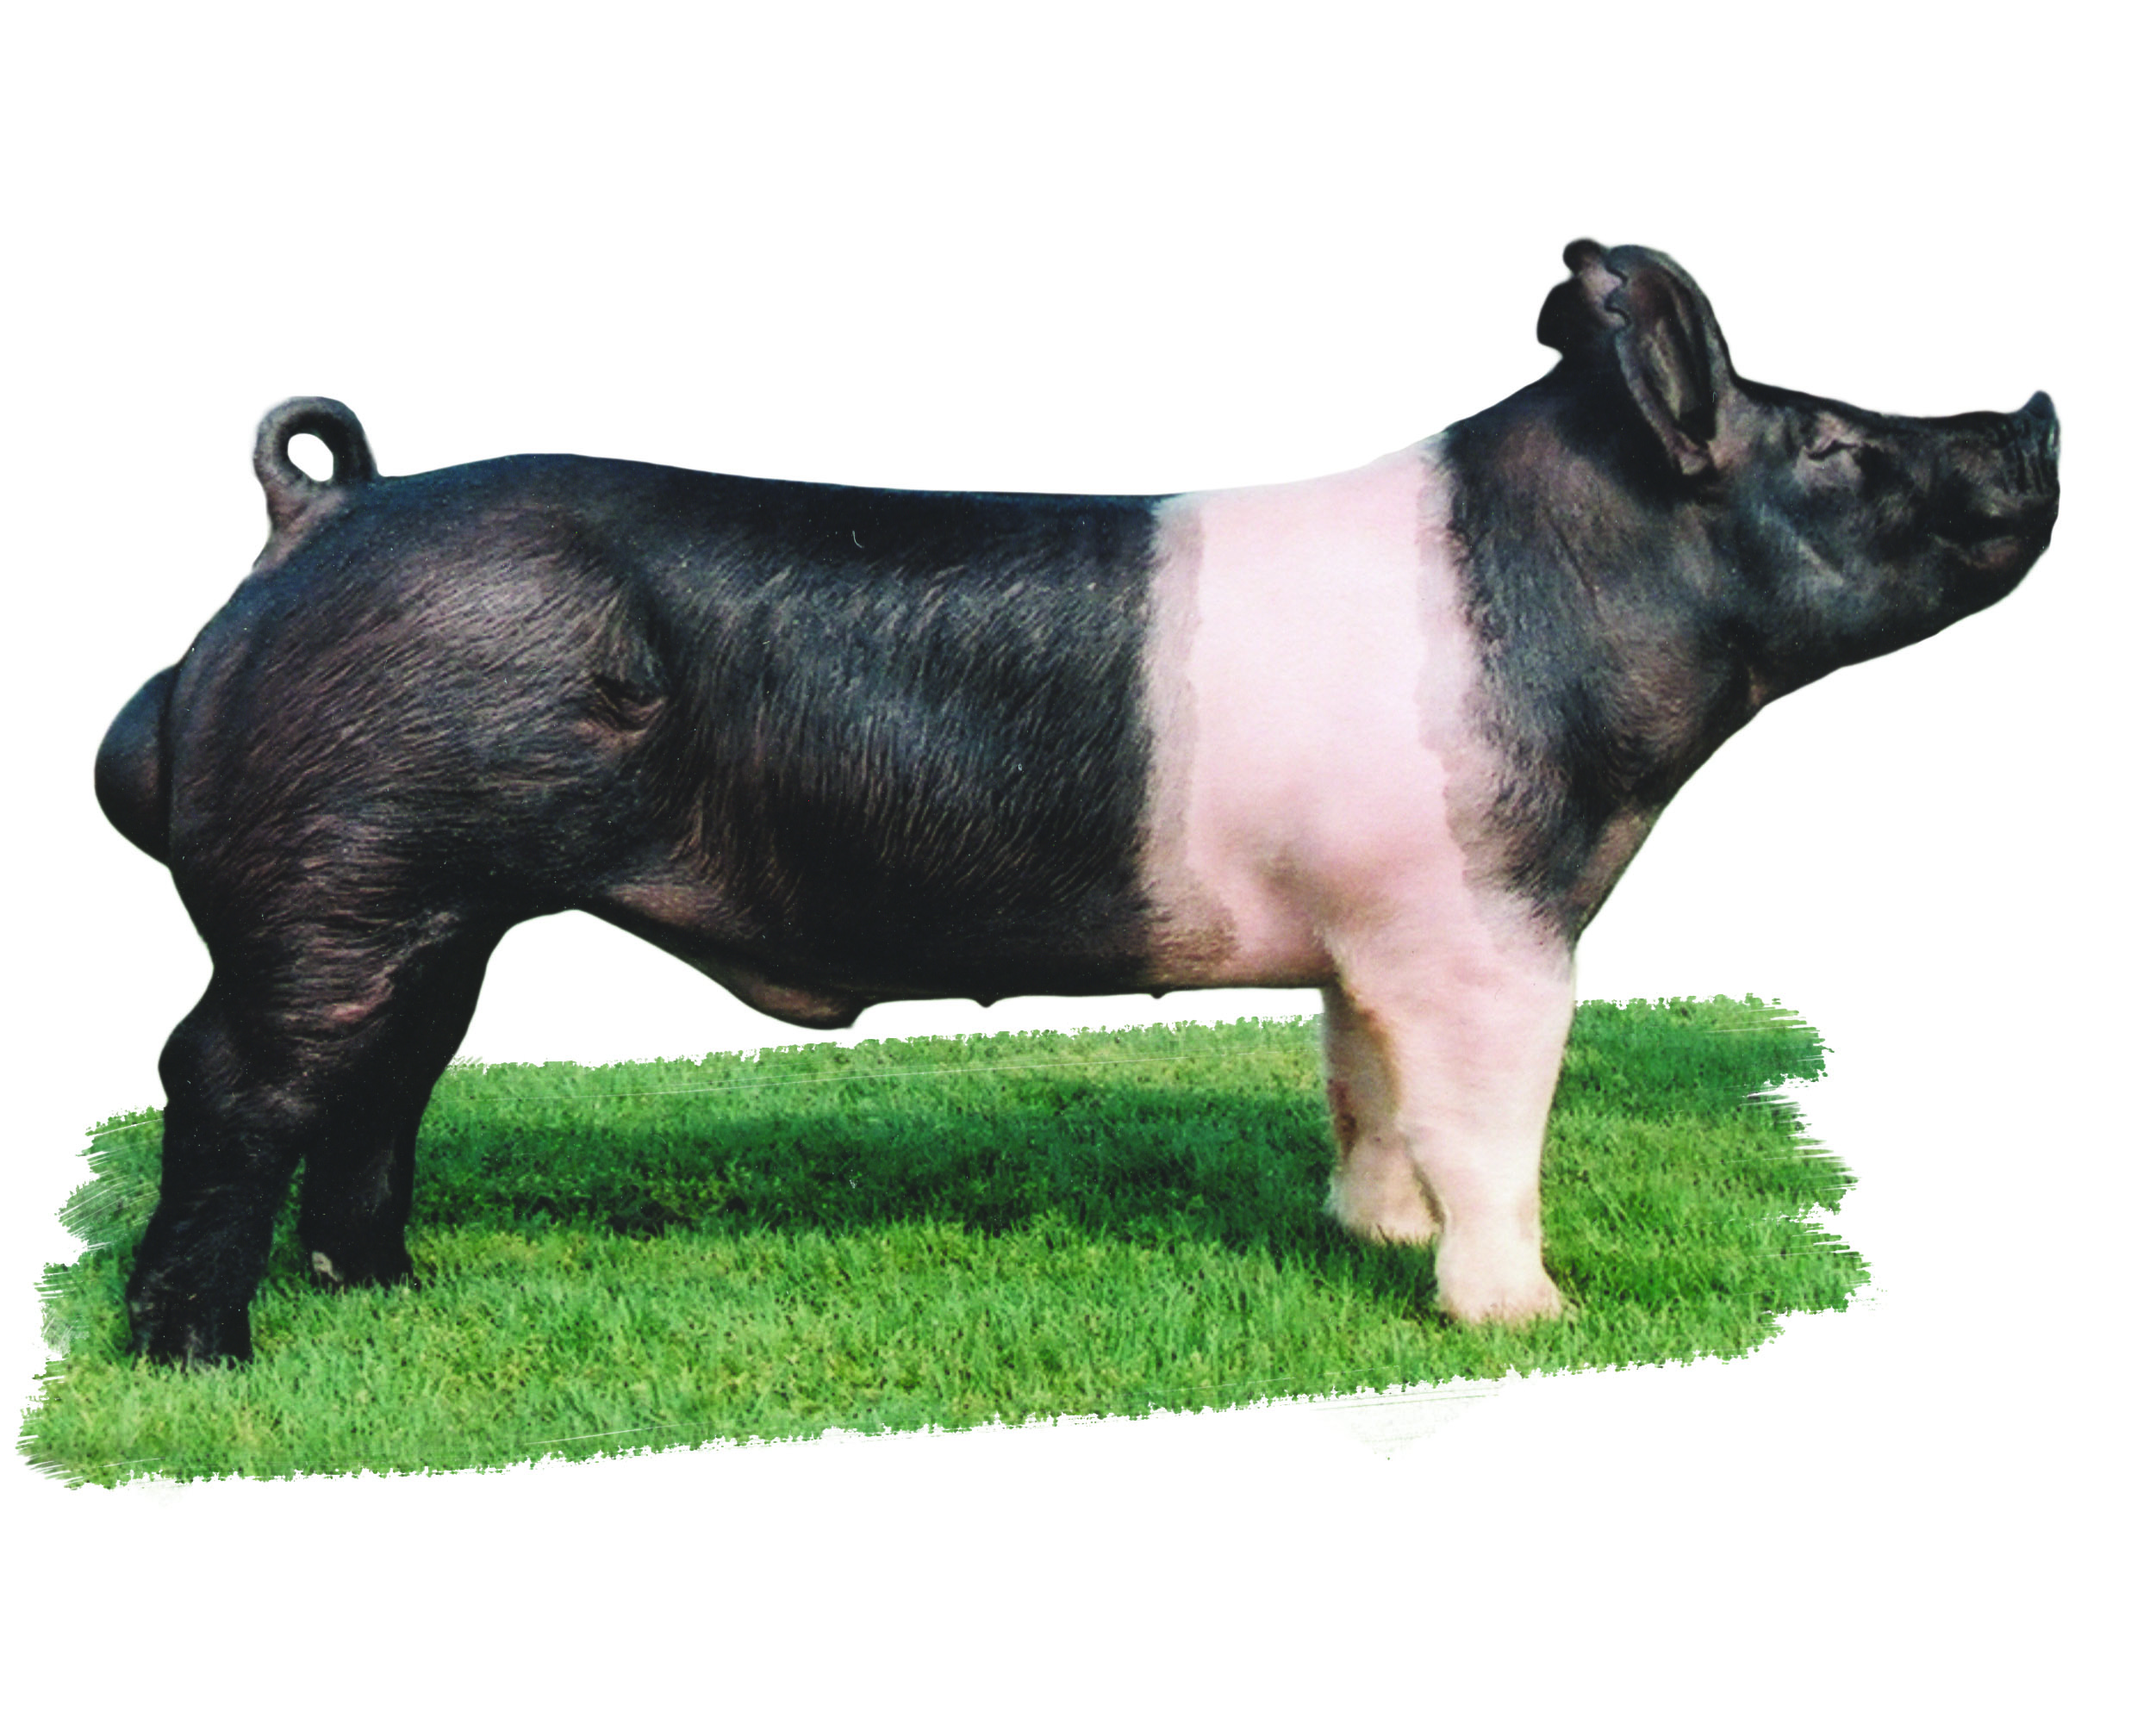 Photo courtesy of National Swine Registry